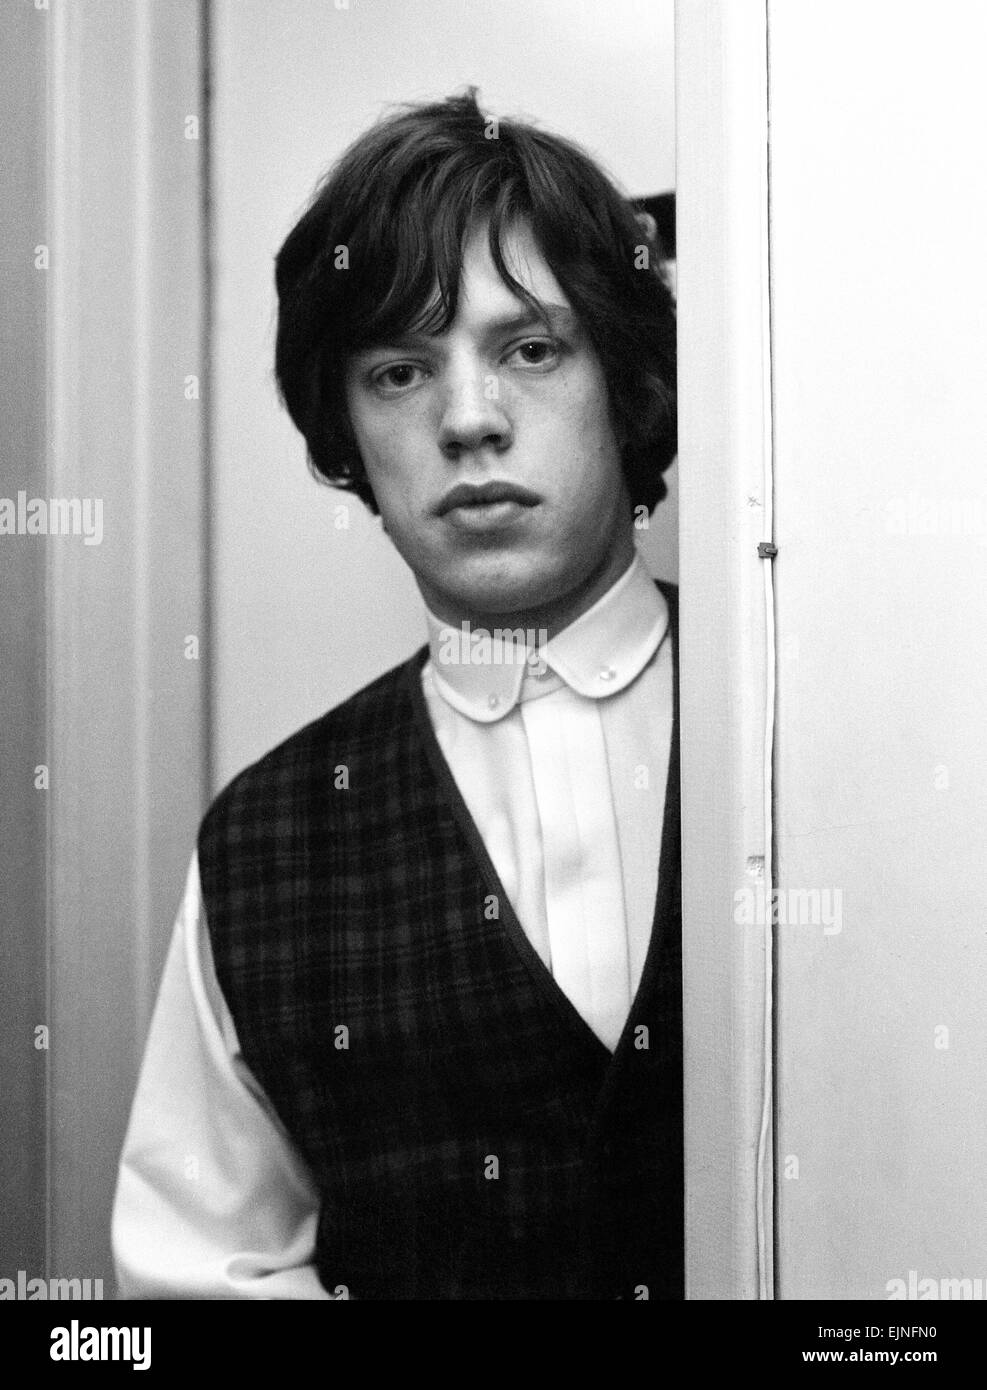 Mick Jagger dei Rolling Stones. Gennaio 1964. Foto Stock